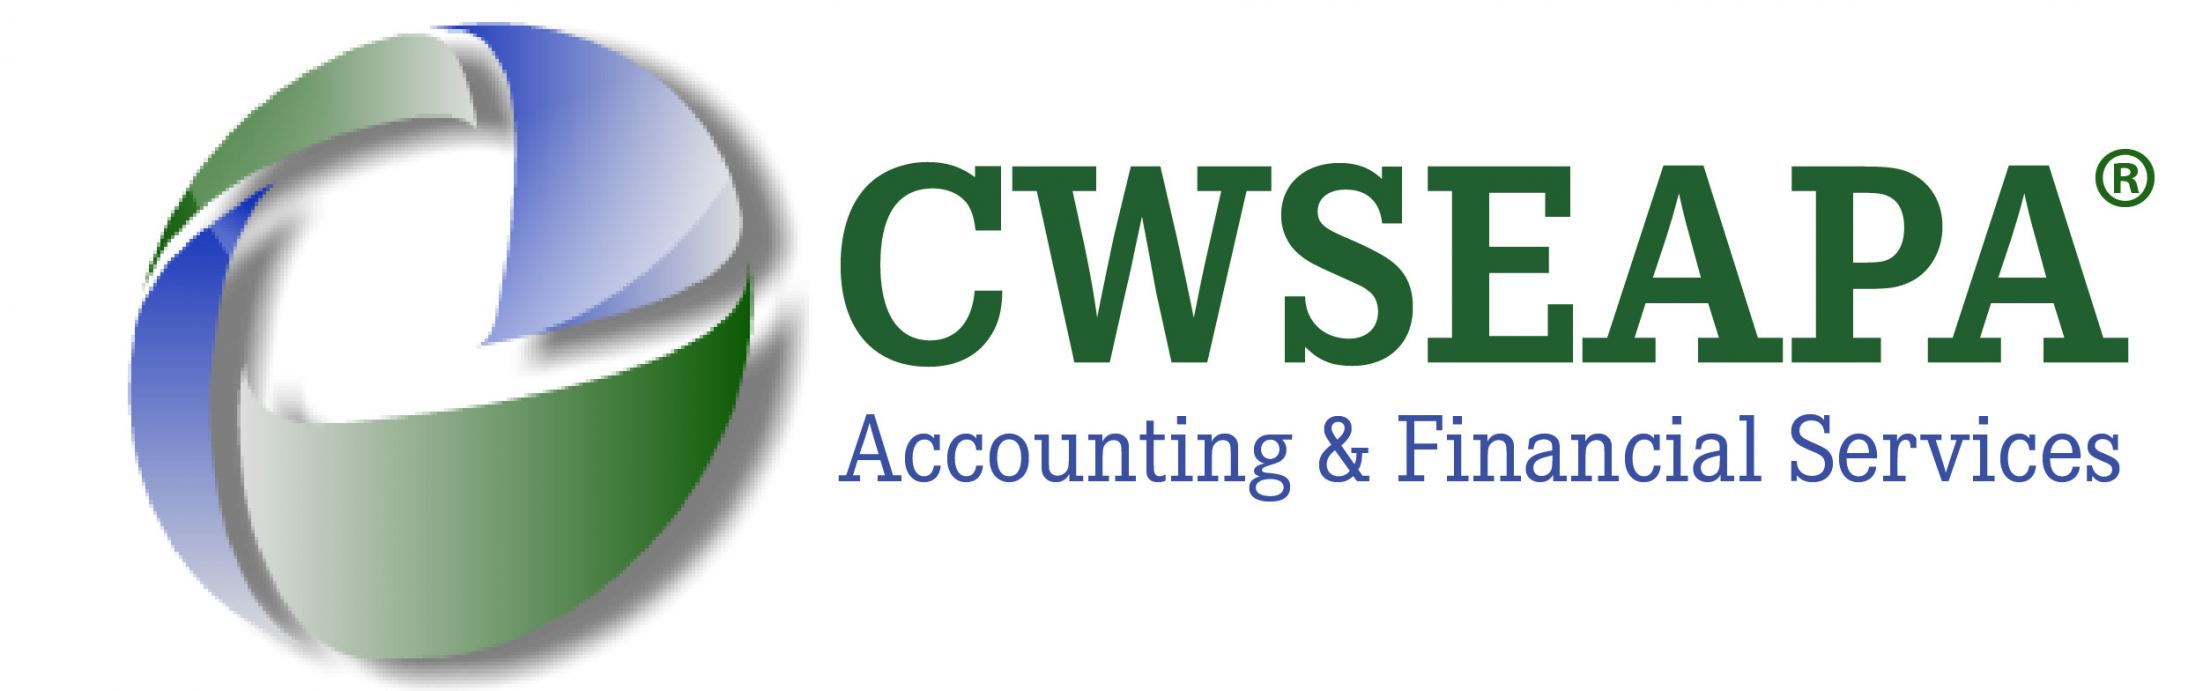 cwseapapllc Logo